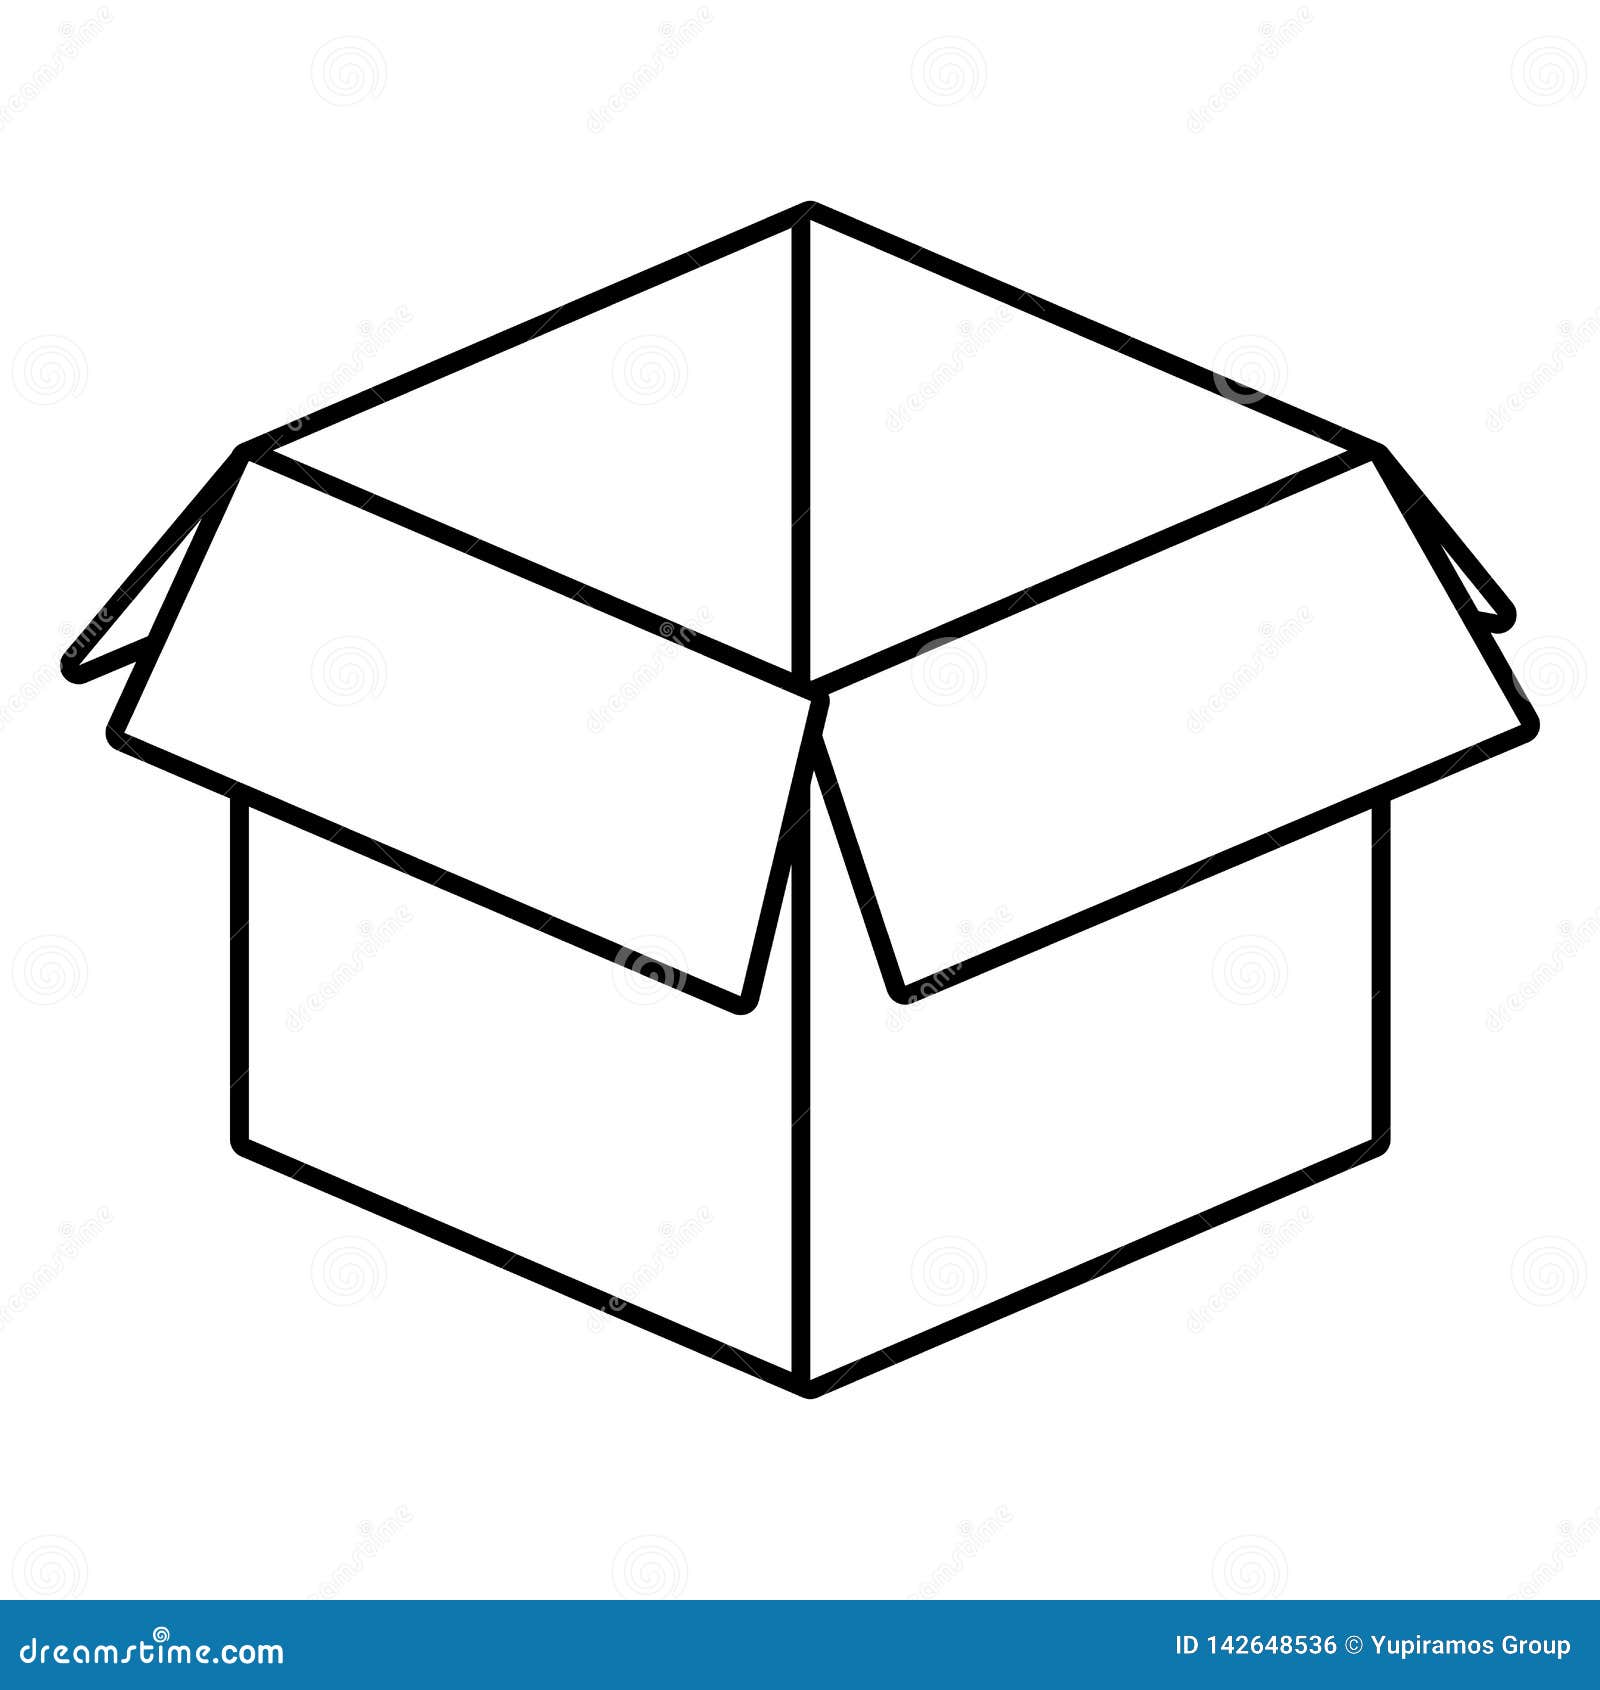 Cardboard box cartoon stock vector. Illustration of square - 142648536